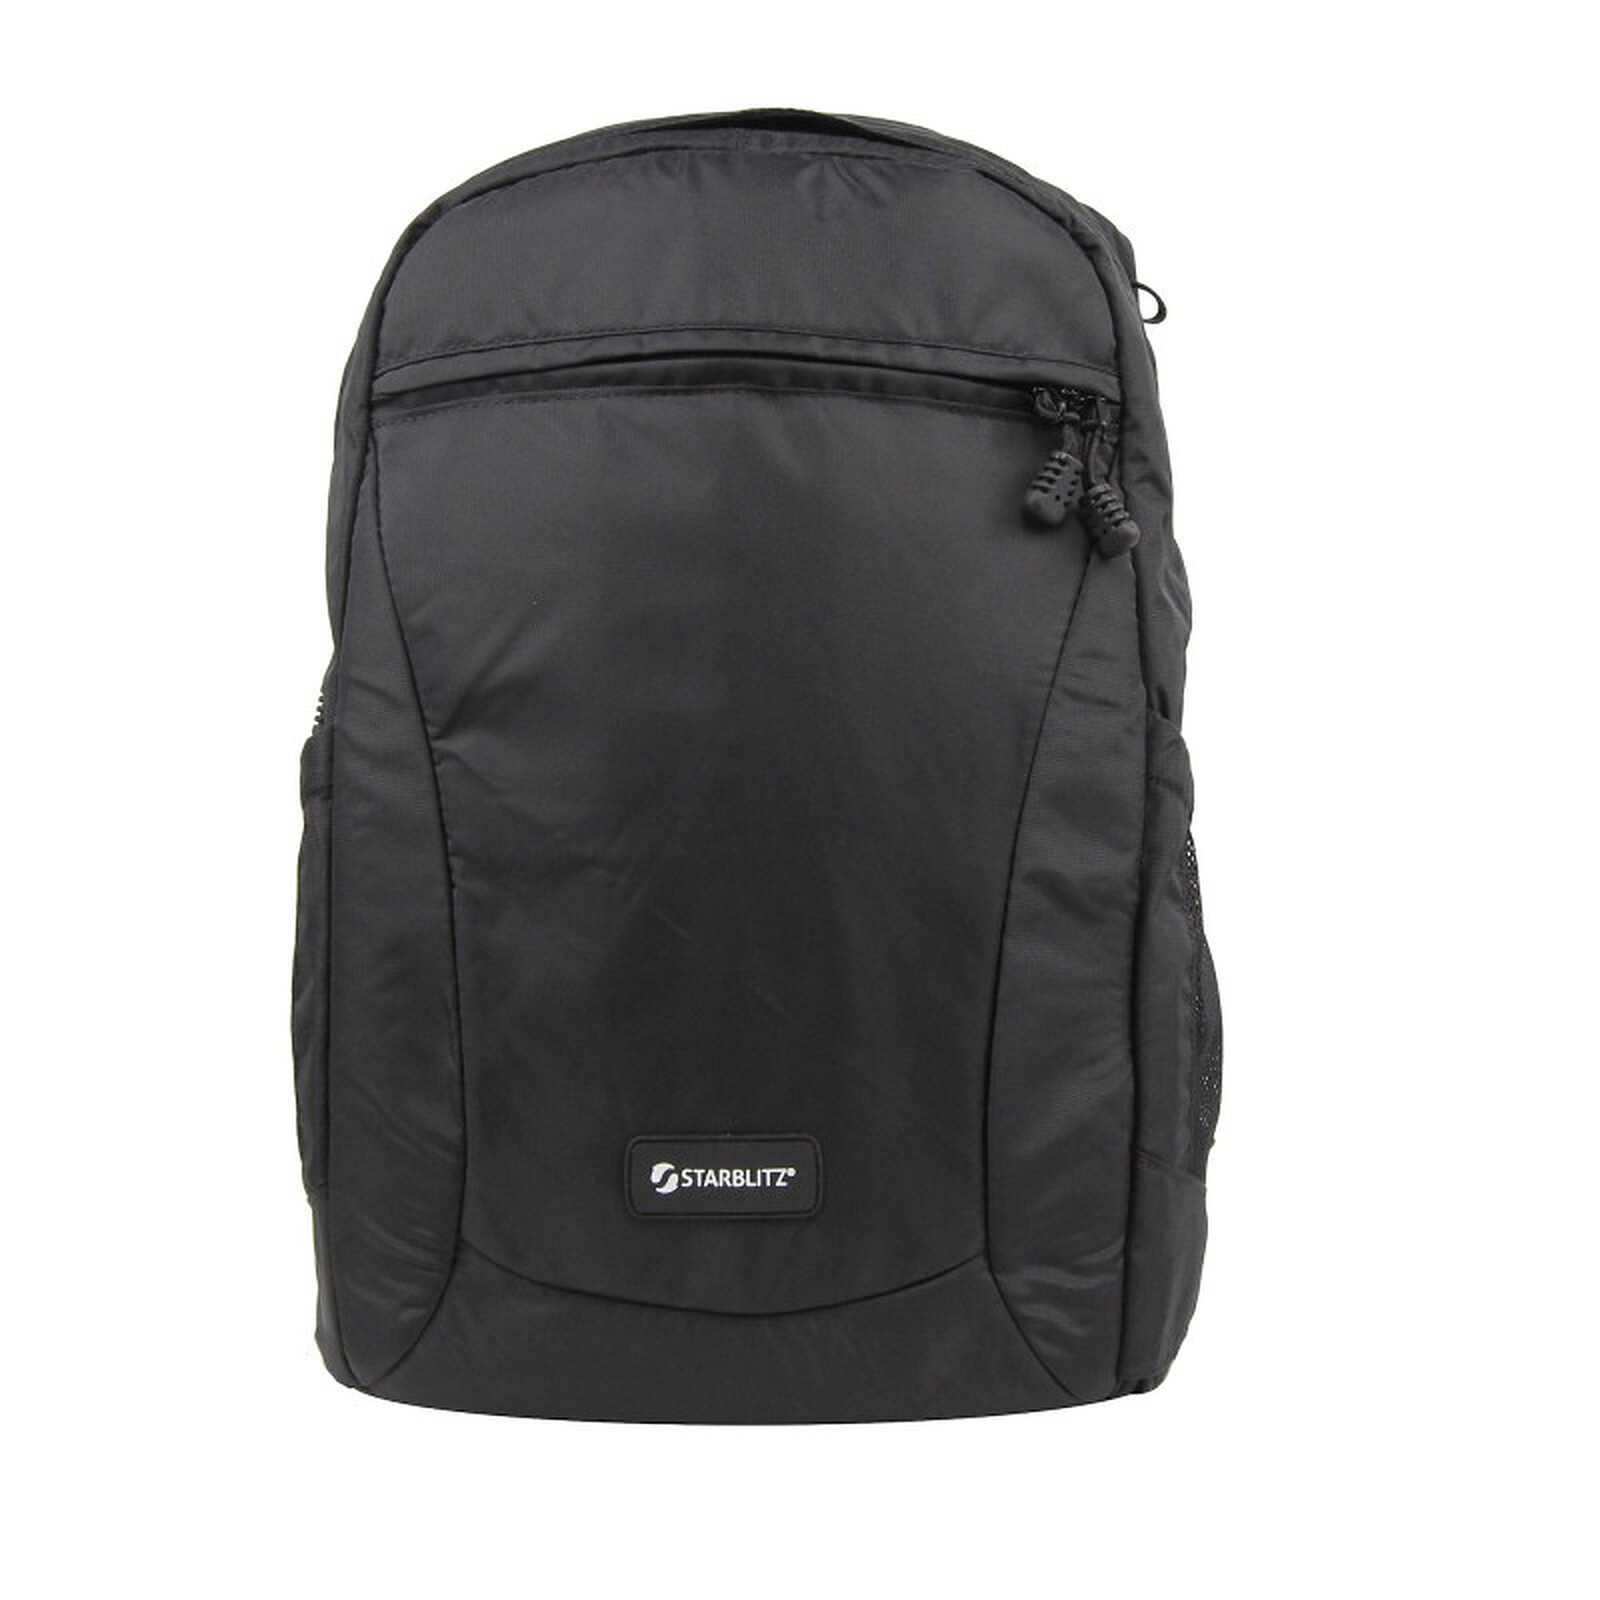 Starblitz R-Bag Black - Camera bag & case - LDLC 3-year warranty